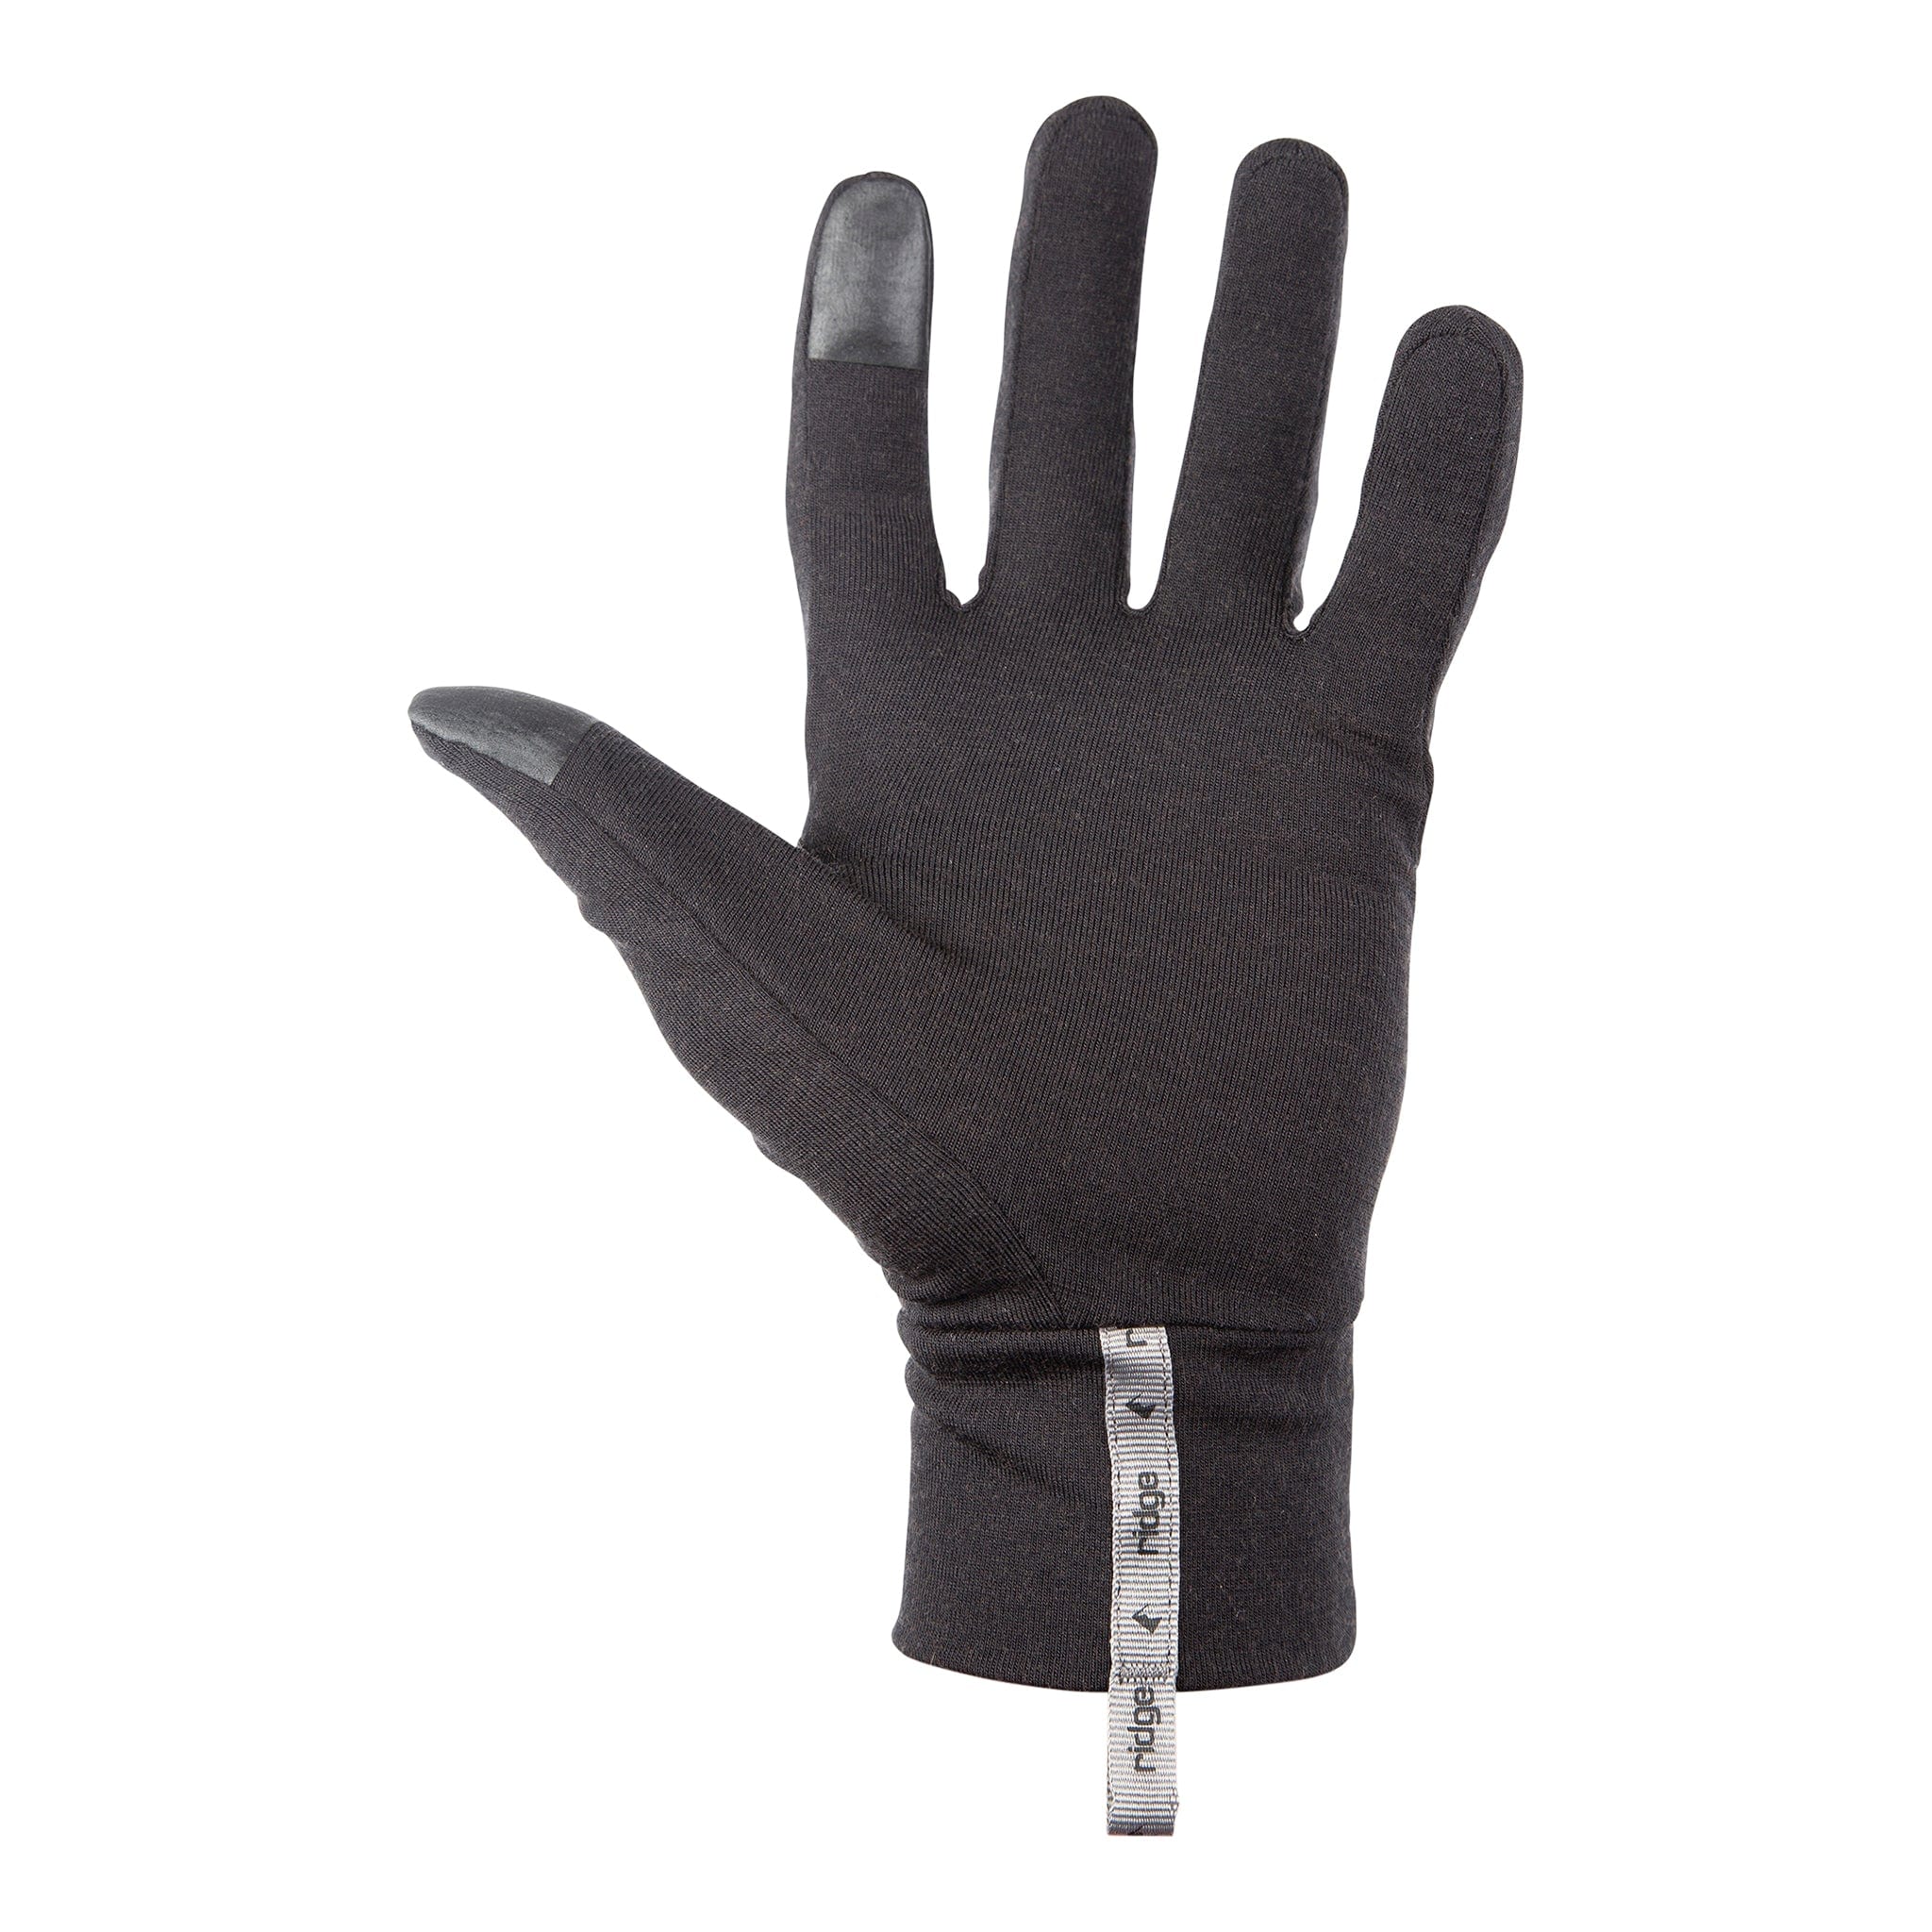 meriwool MERIWOOL Merino Wool Unisex Glove Liners for use with